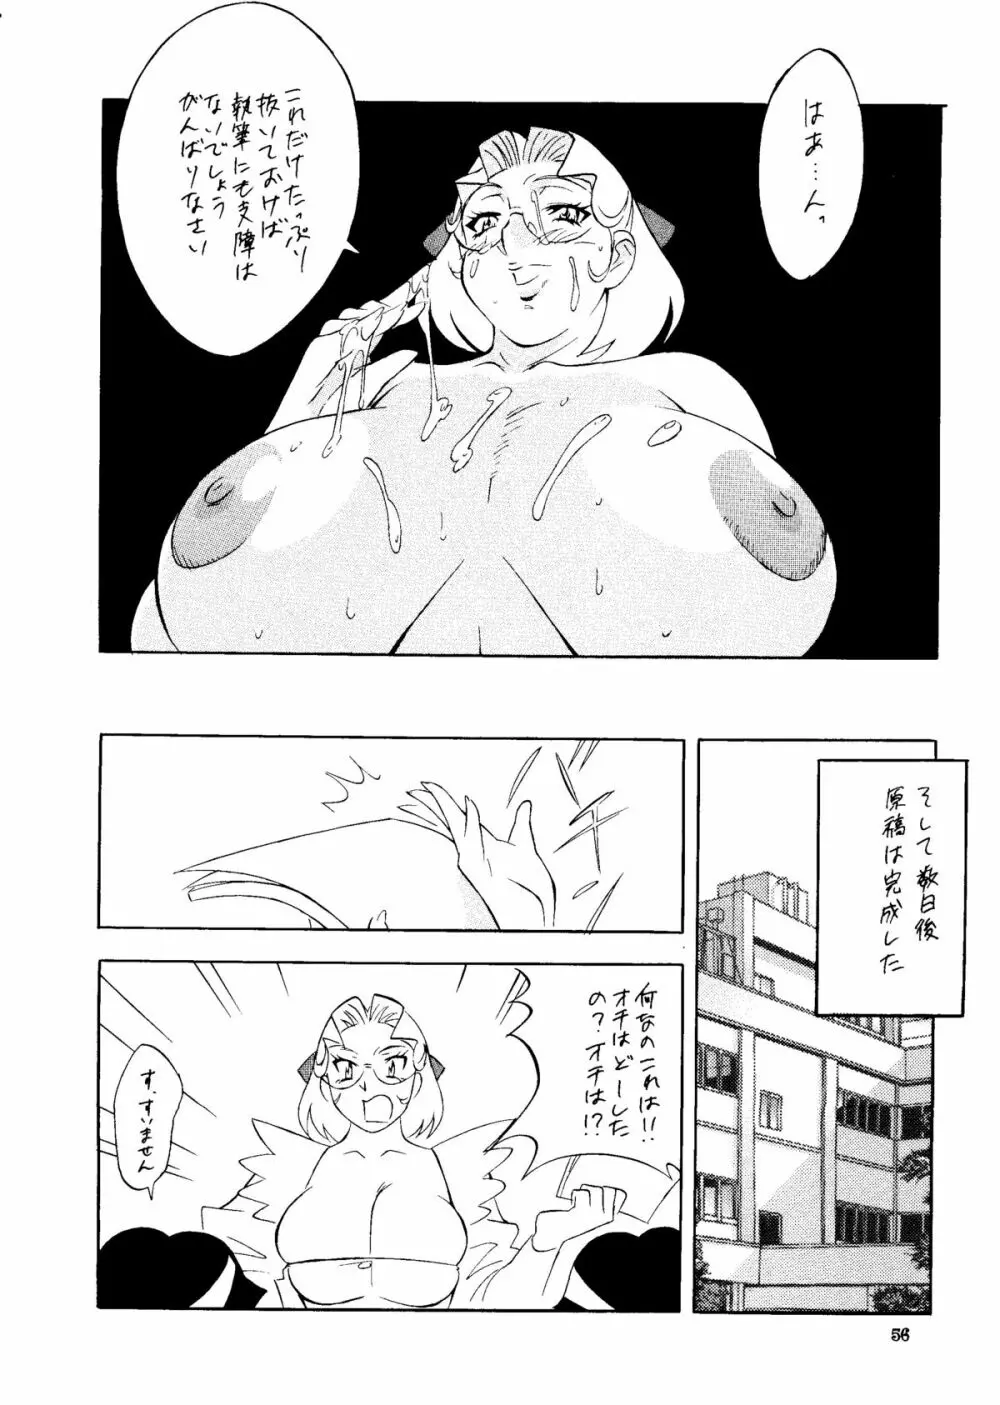 BUY or DIE おかちめんたいこ 55ページ